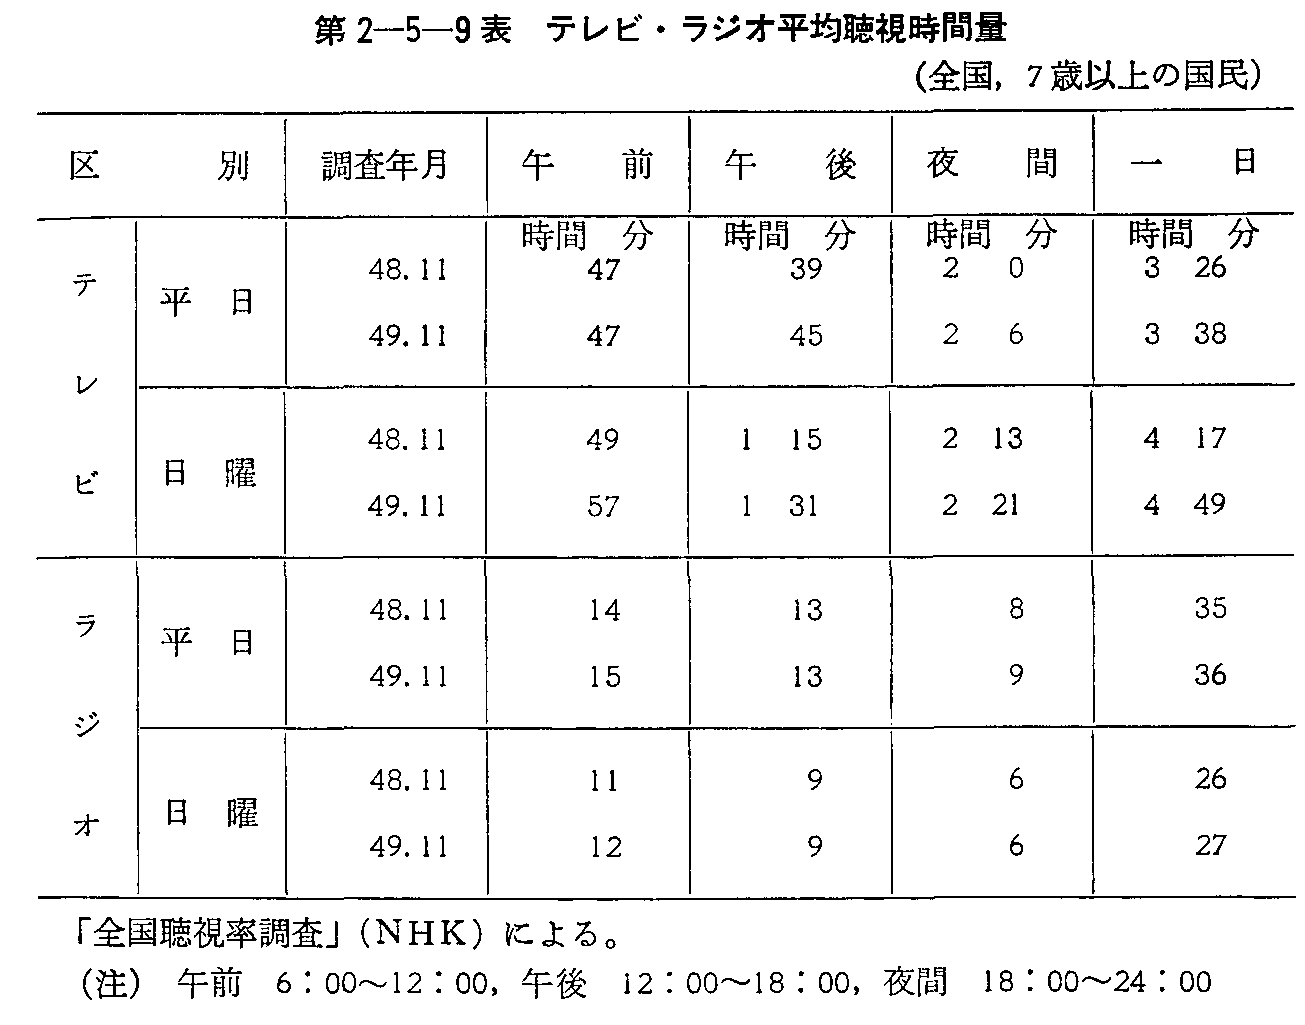 2-5-9\ erEWIϒԗ(S,7Έȏ̍)